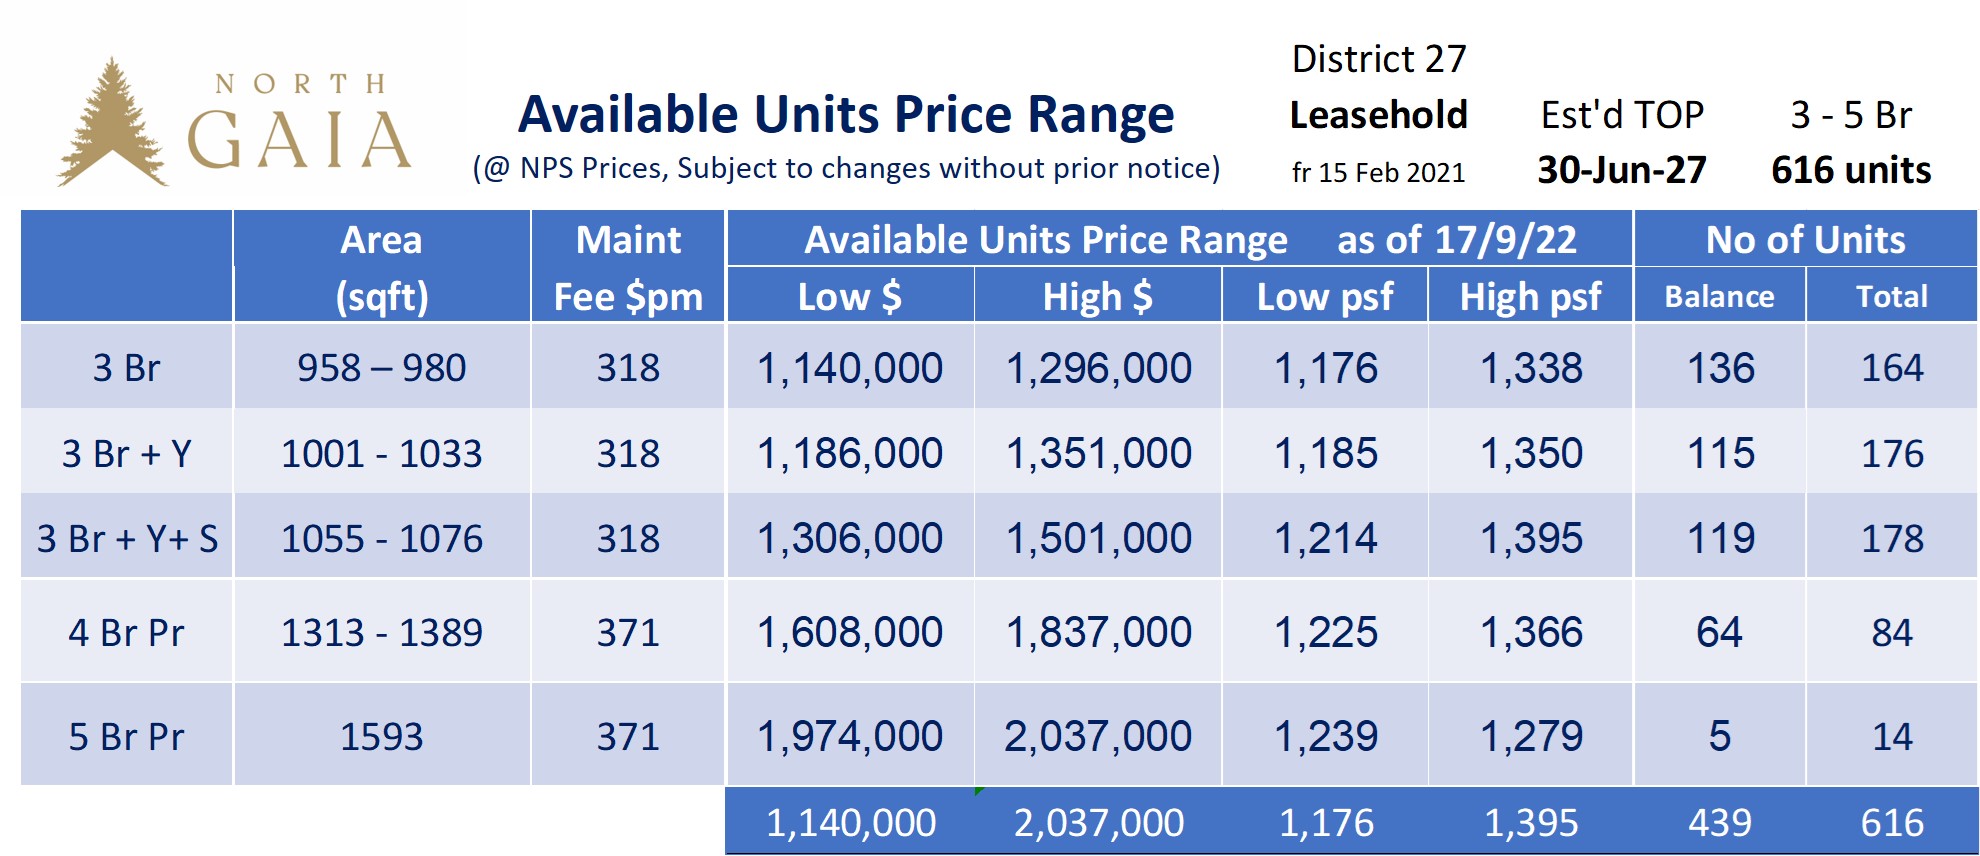 North Gaia Available Units Price Range